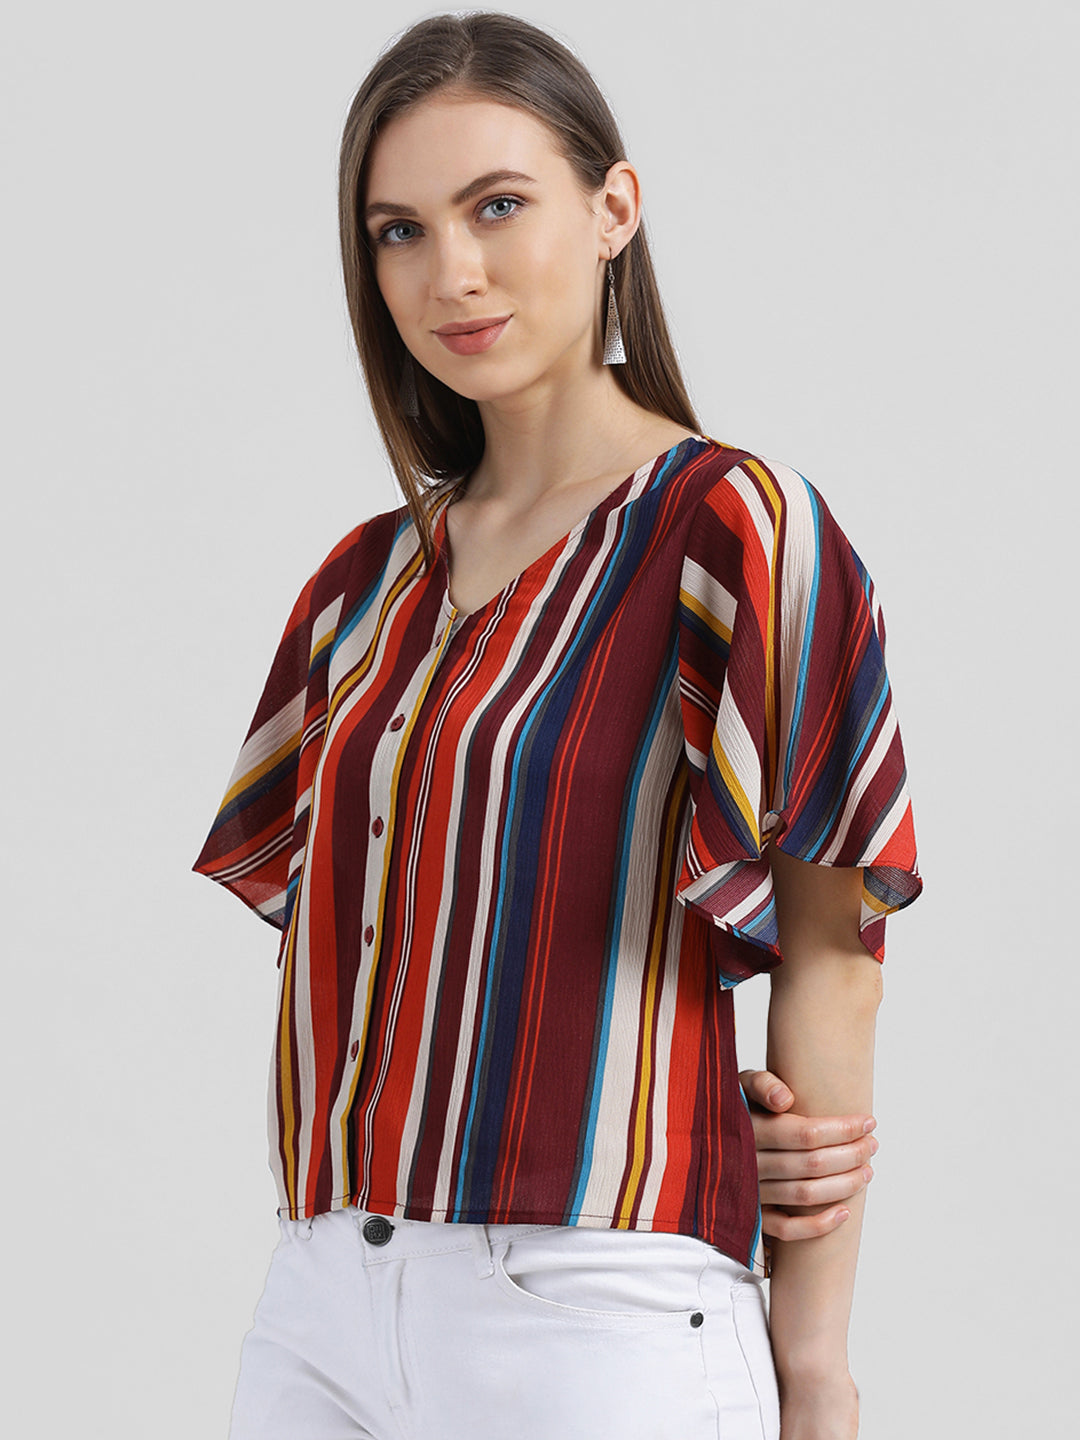 Zink London Women's Multi Striped Shirt Style Top